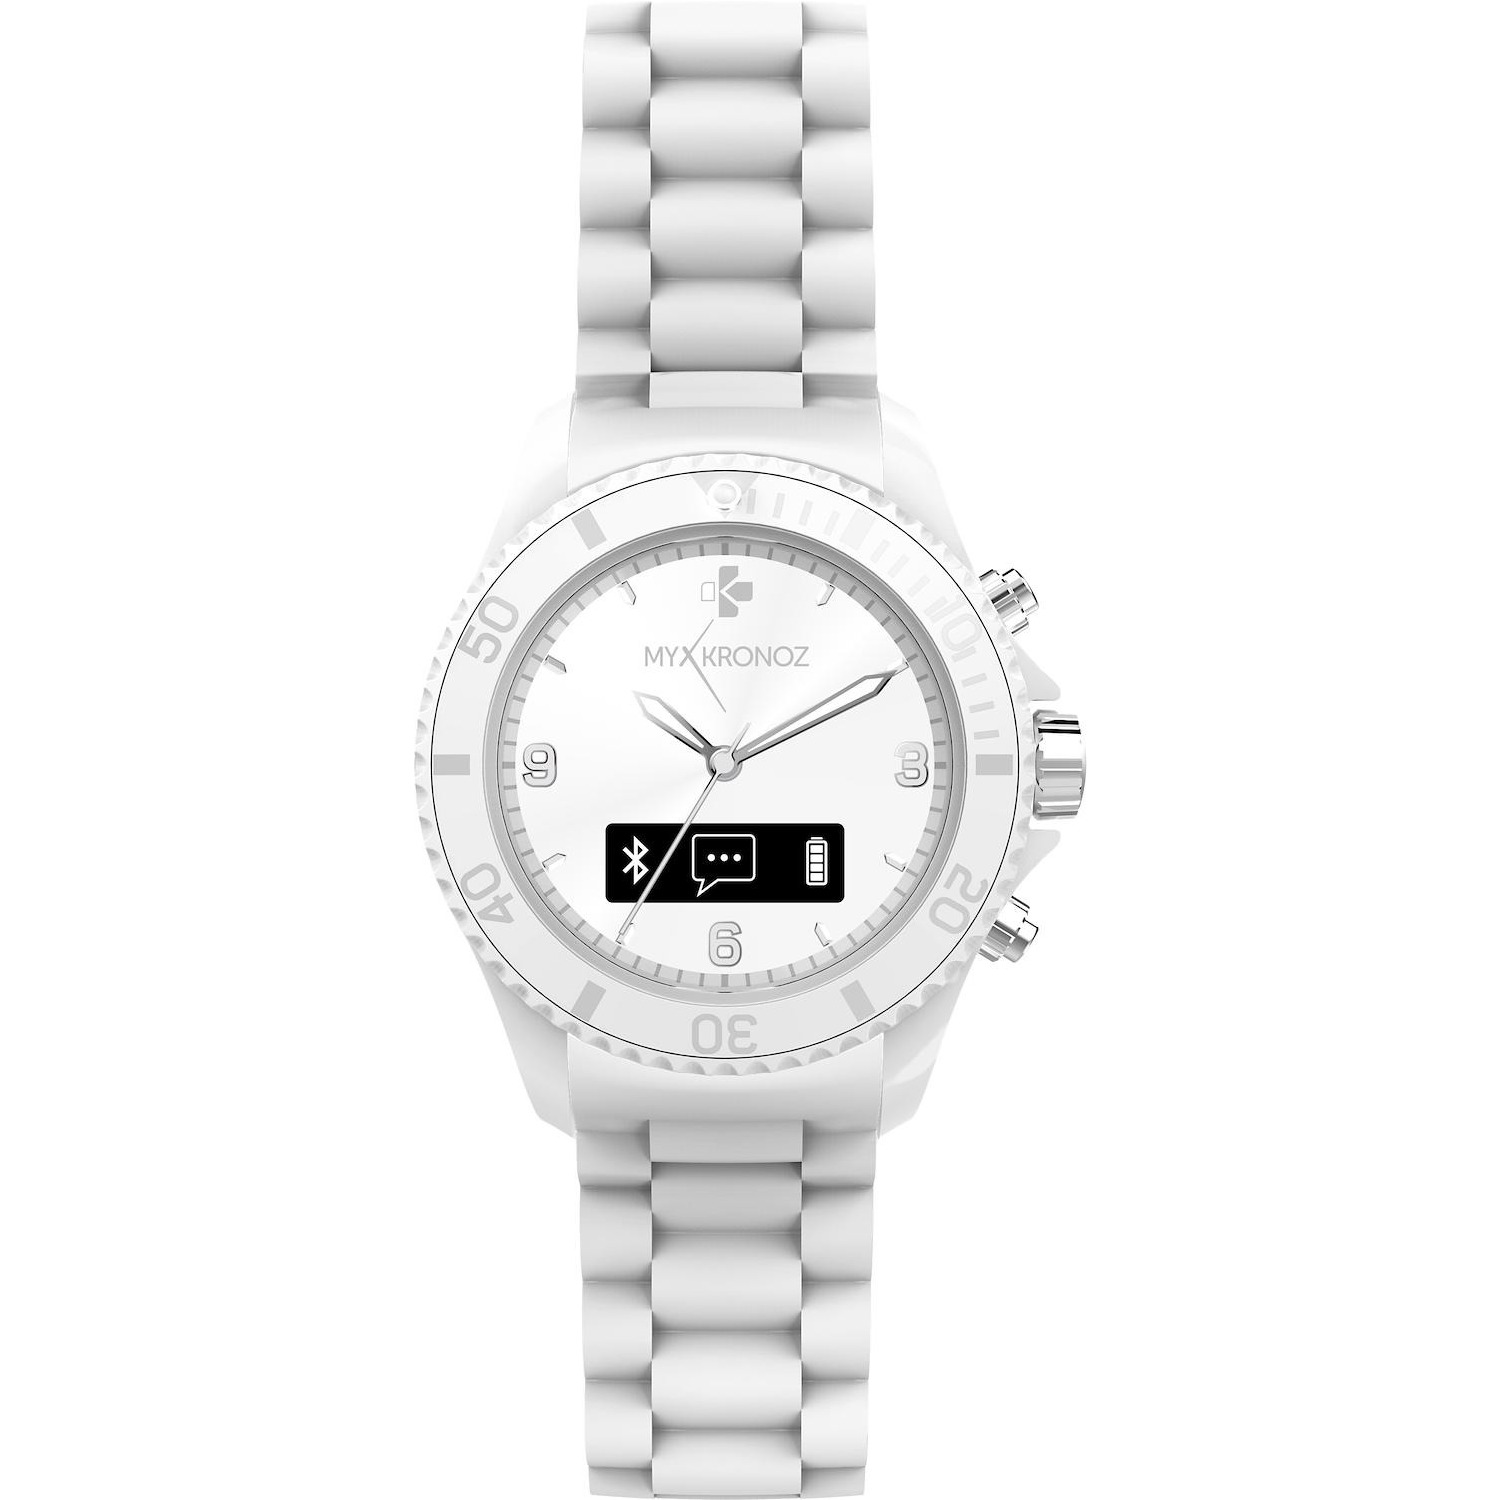 Immagine per Smartwatch MyKronoz Clock white da DIMOStore